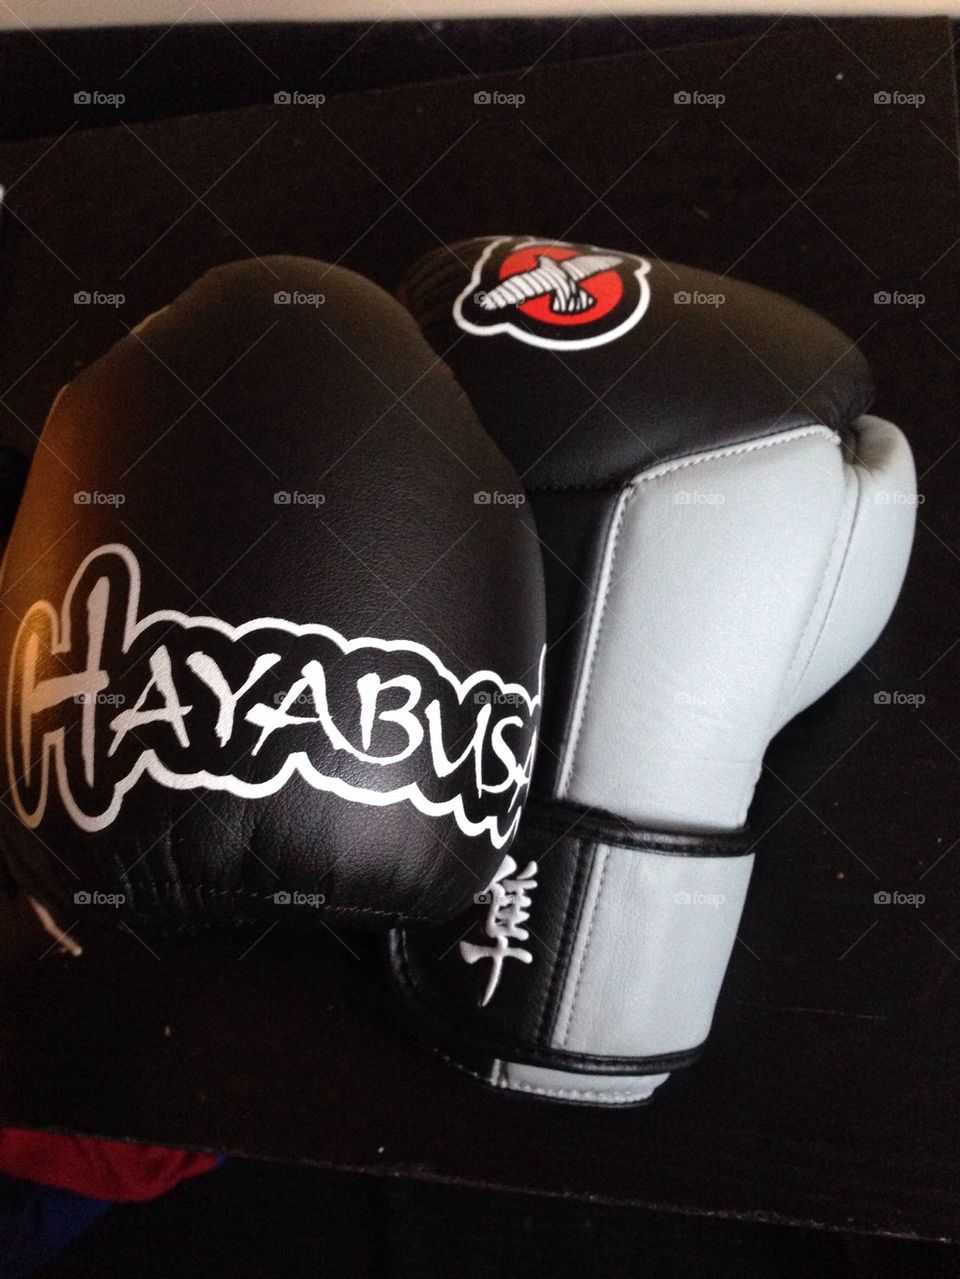 Hayabusa boxing gloves